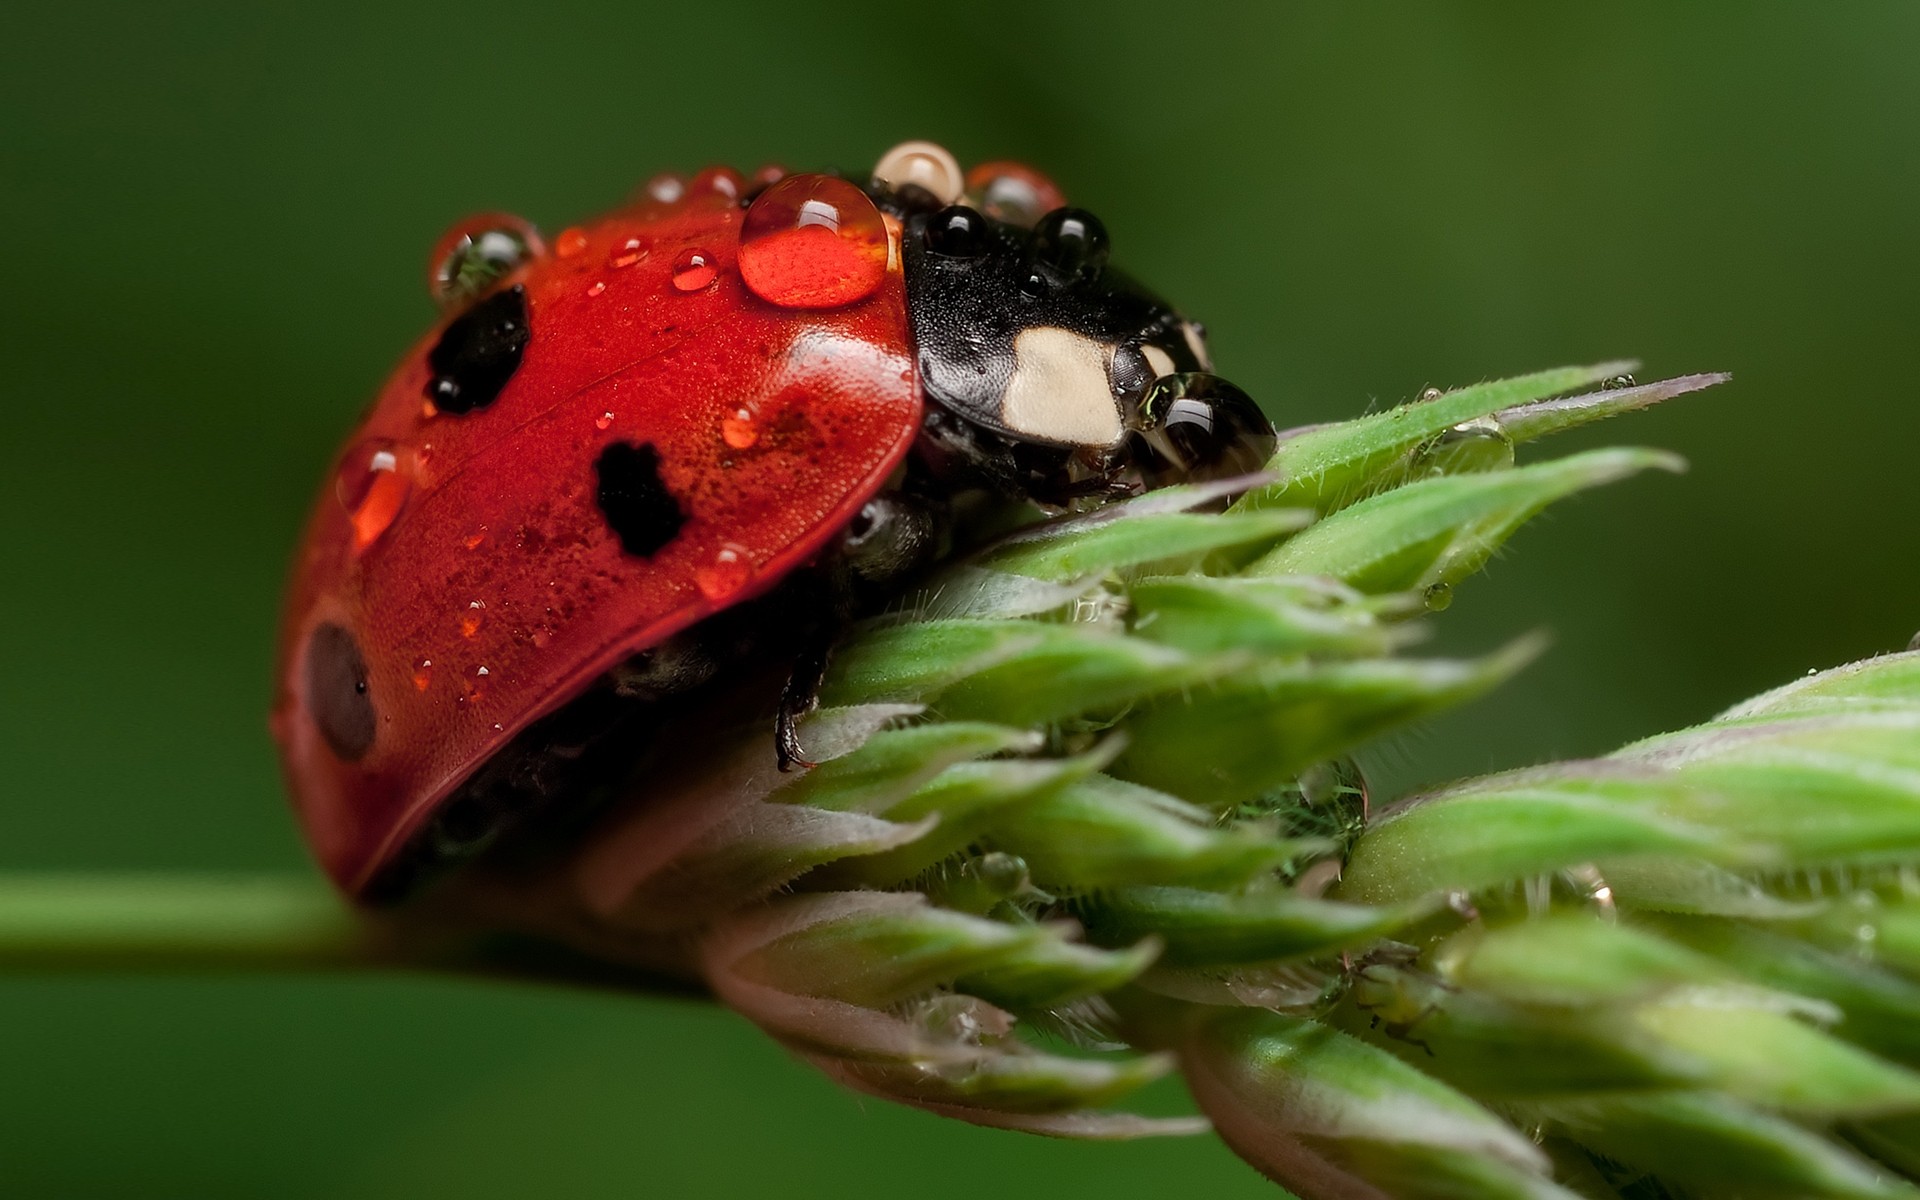 insects nature insect wildlife ladybug biology leaf animal outdoors invertebrate animals